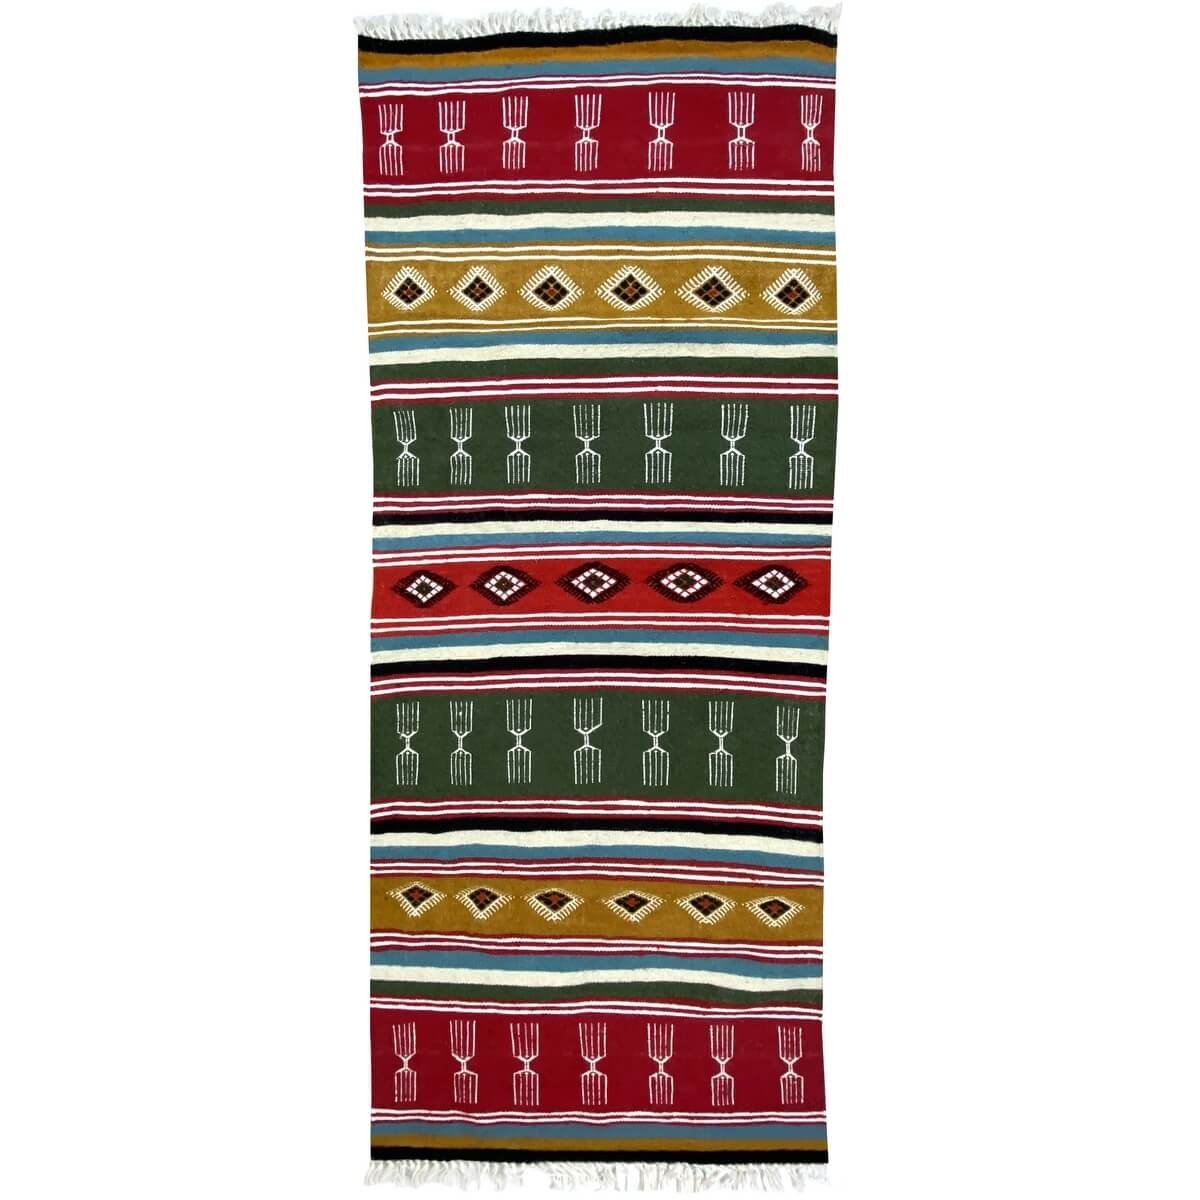 Tapete berbere Tapete Kilim longo Siga 70x180 Multicor (Tecidos à mão, Lã) Tapete tunisiano kilim, estilo marroquino. Tapete ret